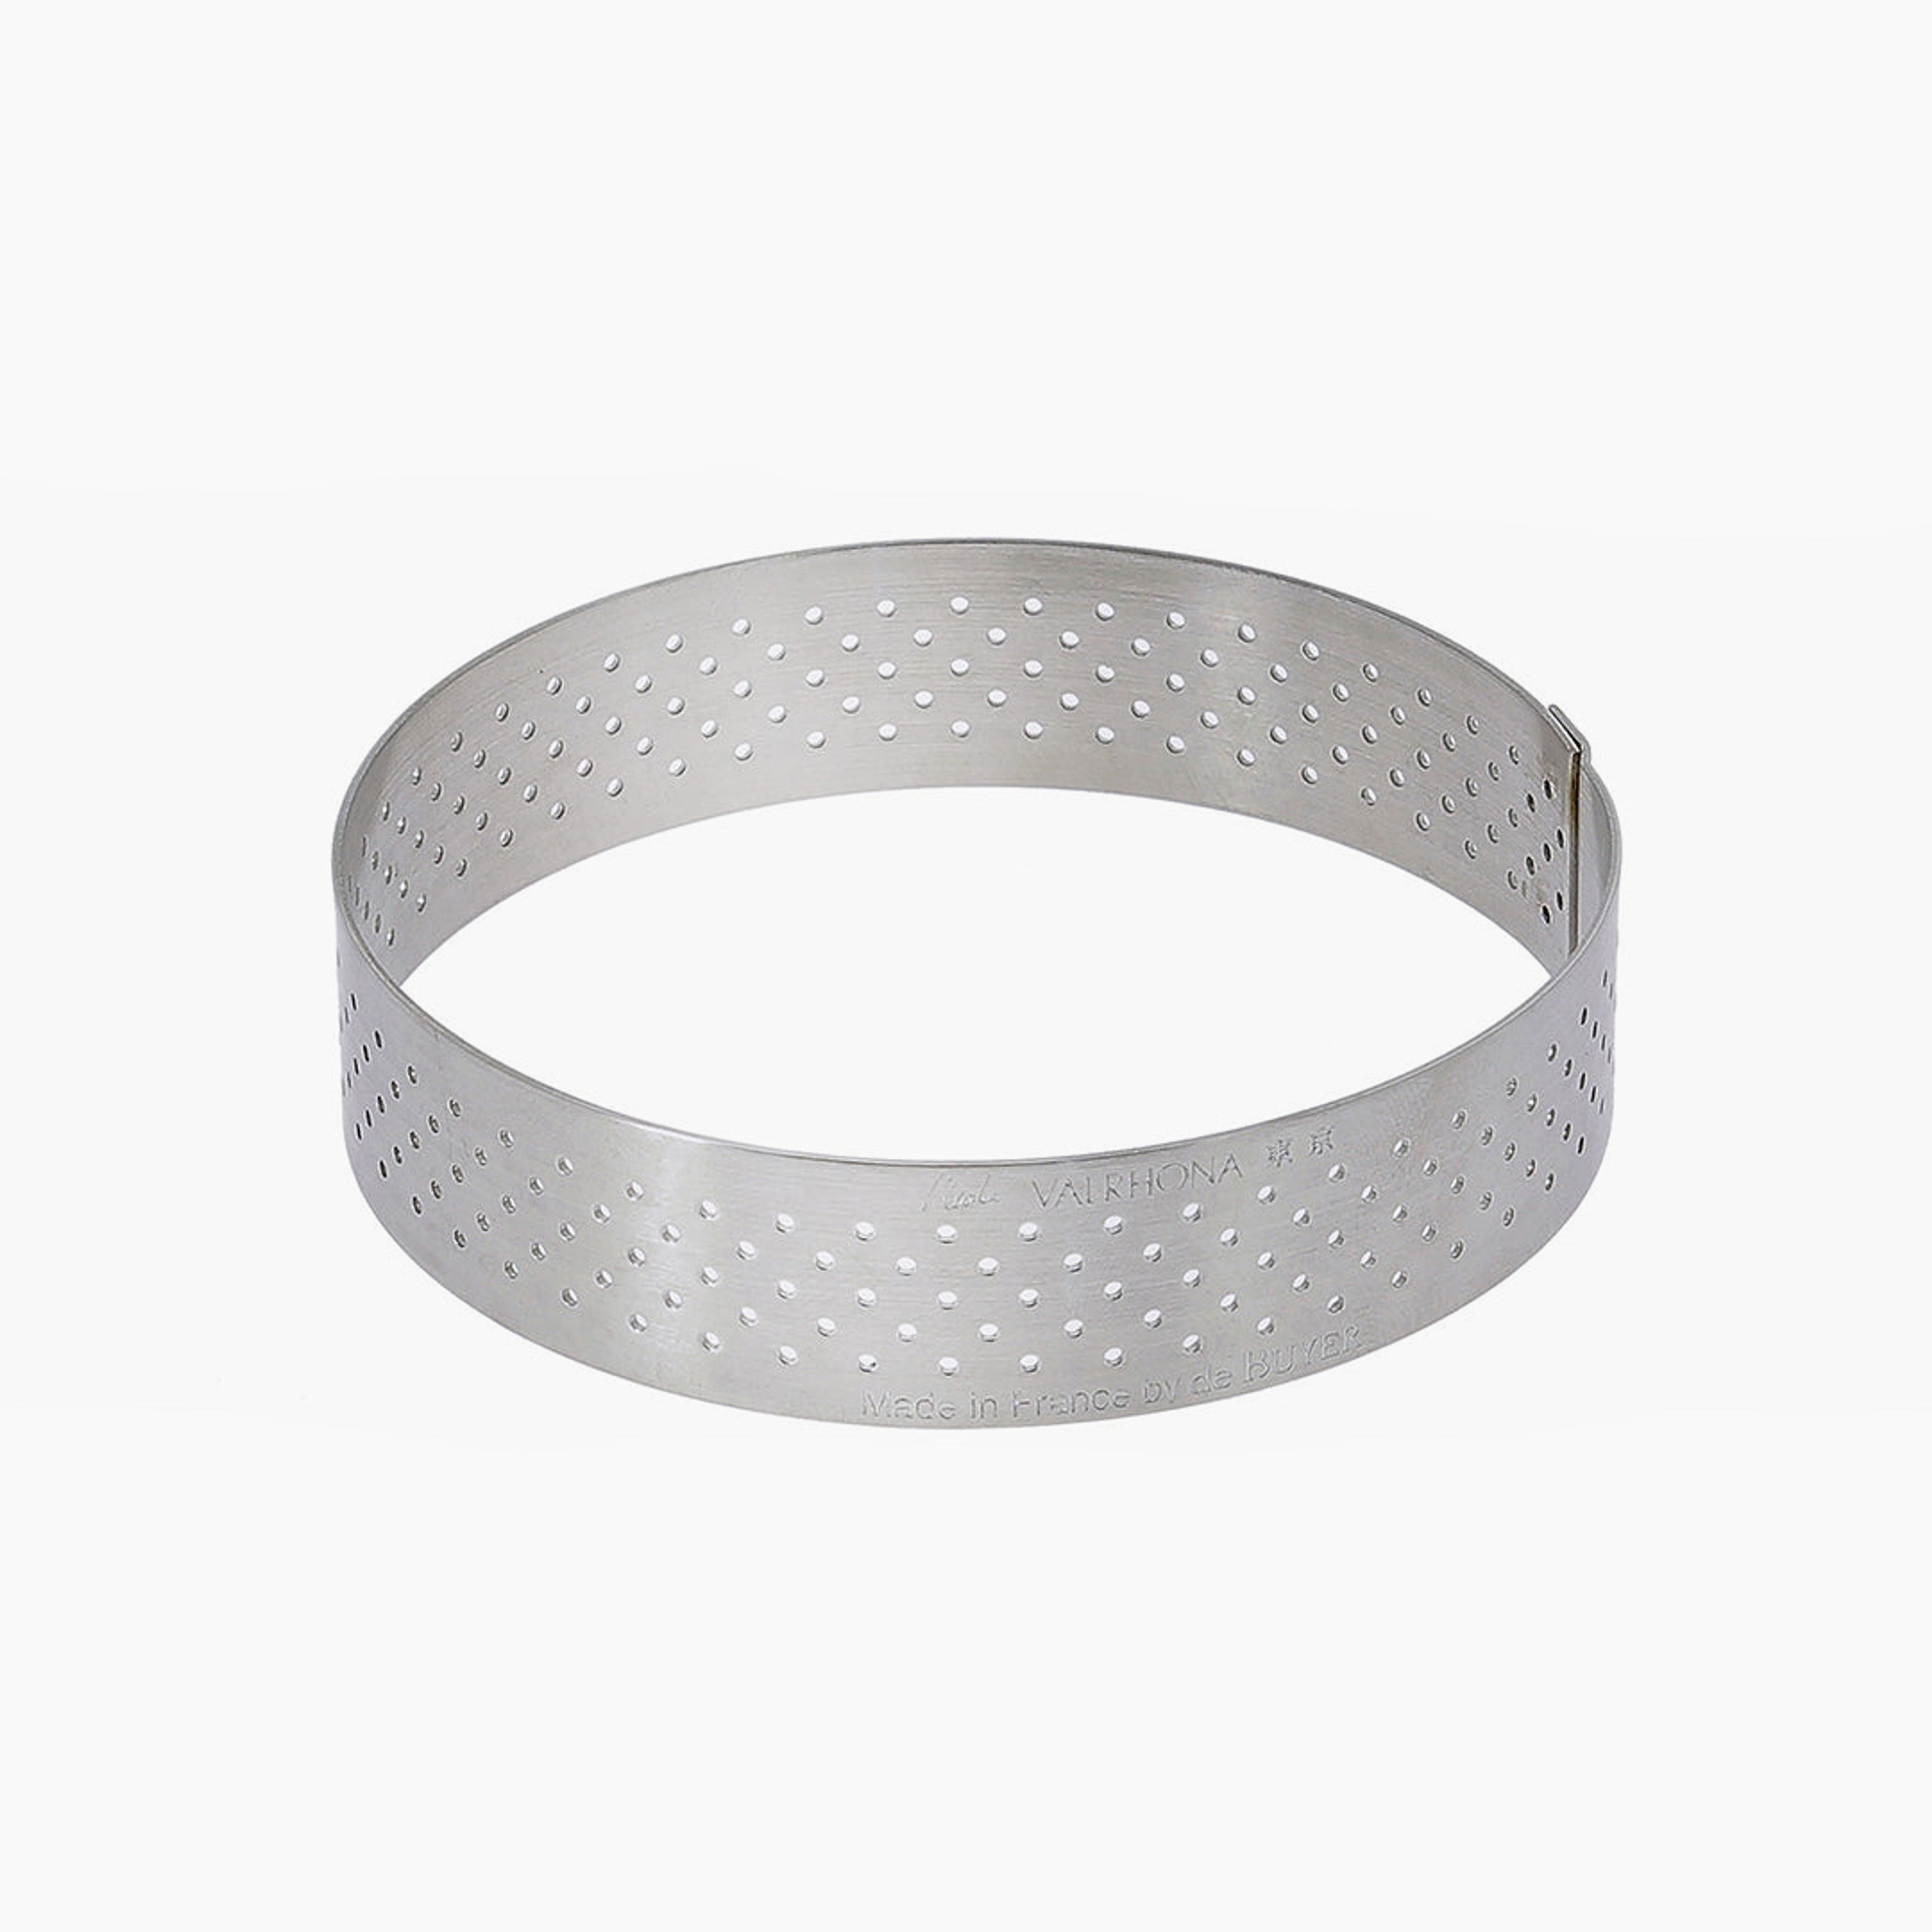 Perforated Round Tart Ring Height 0.8"